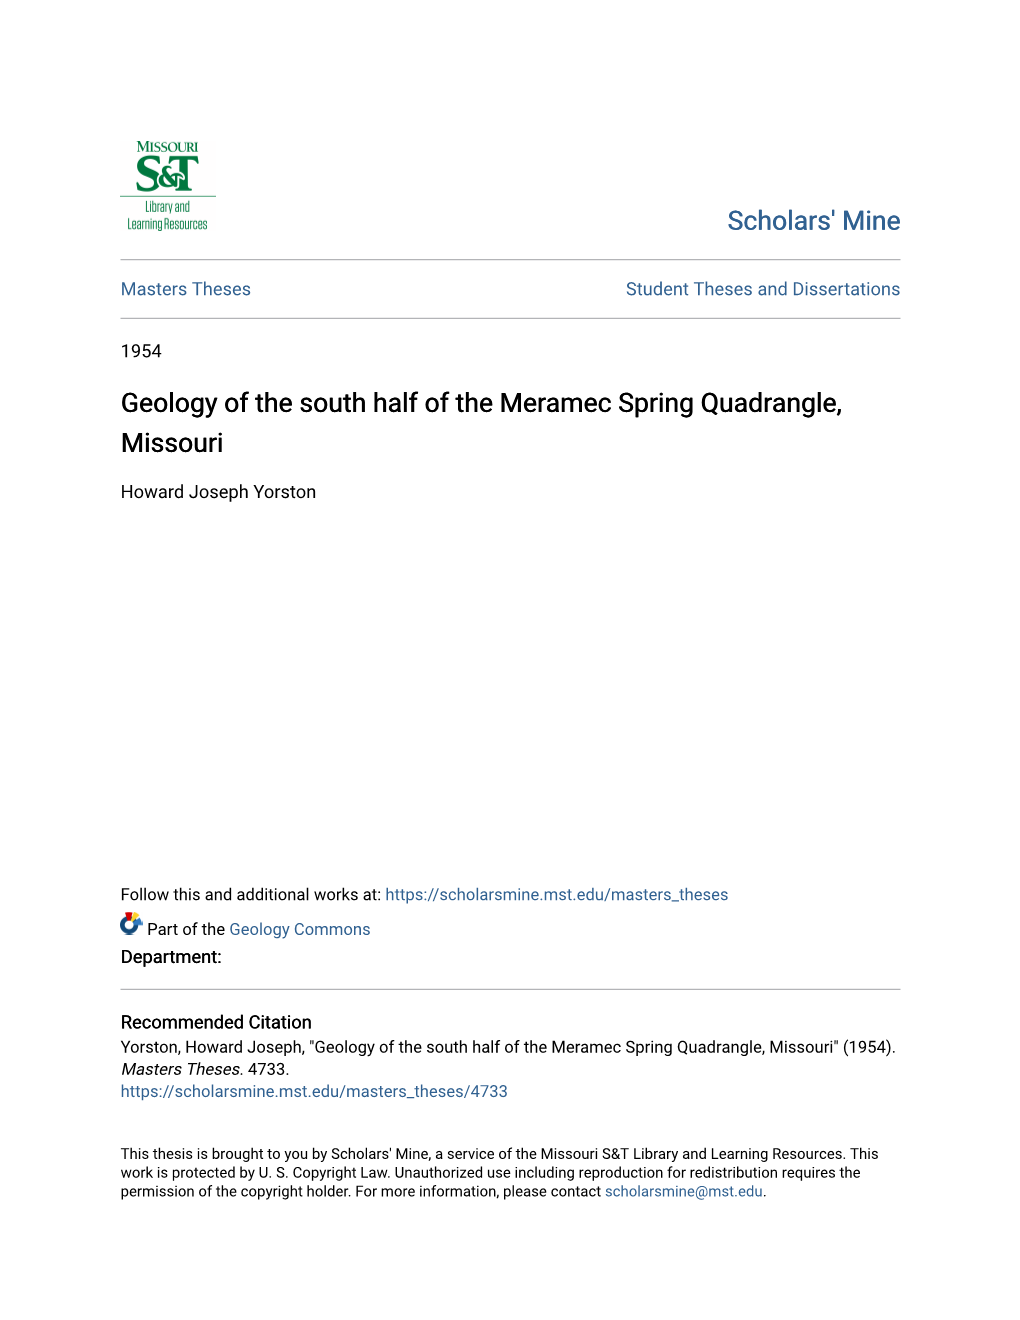 Geology of the South Half of the Meramec Spring Quadrangle, Missouri